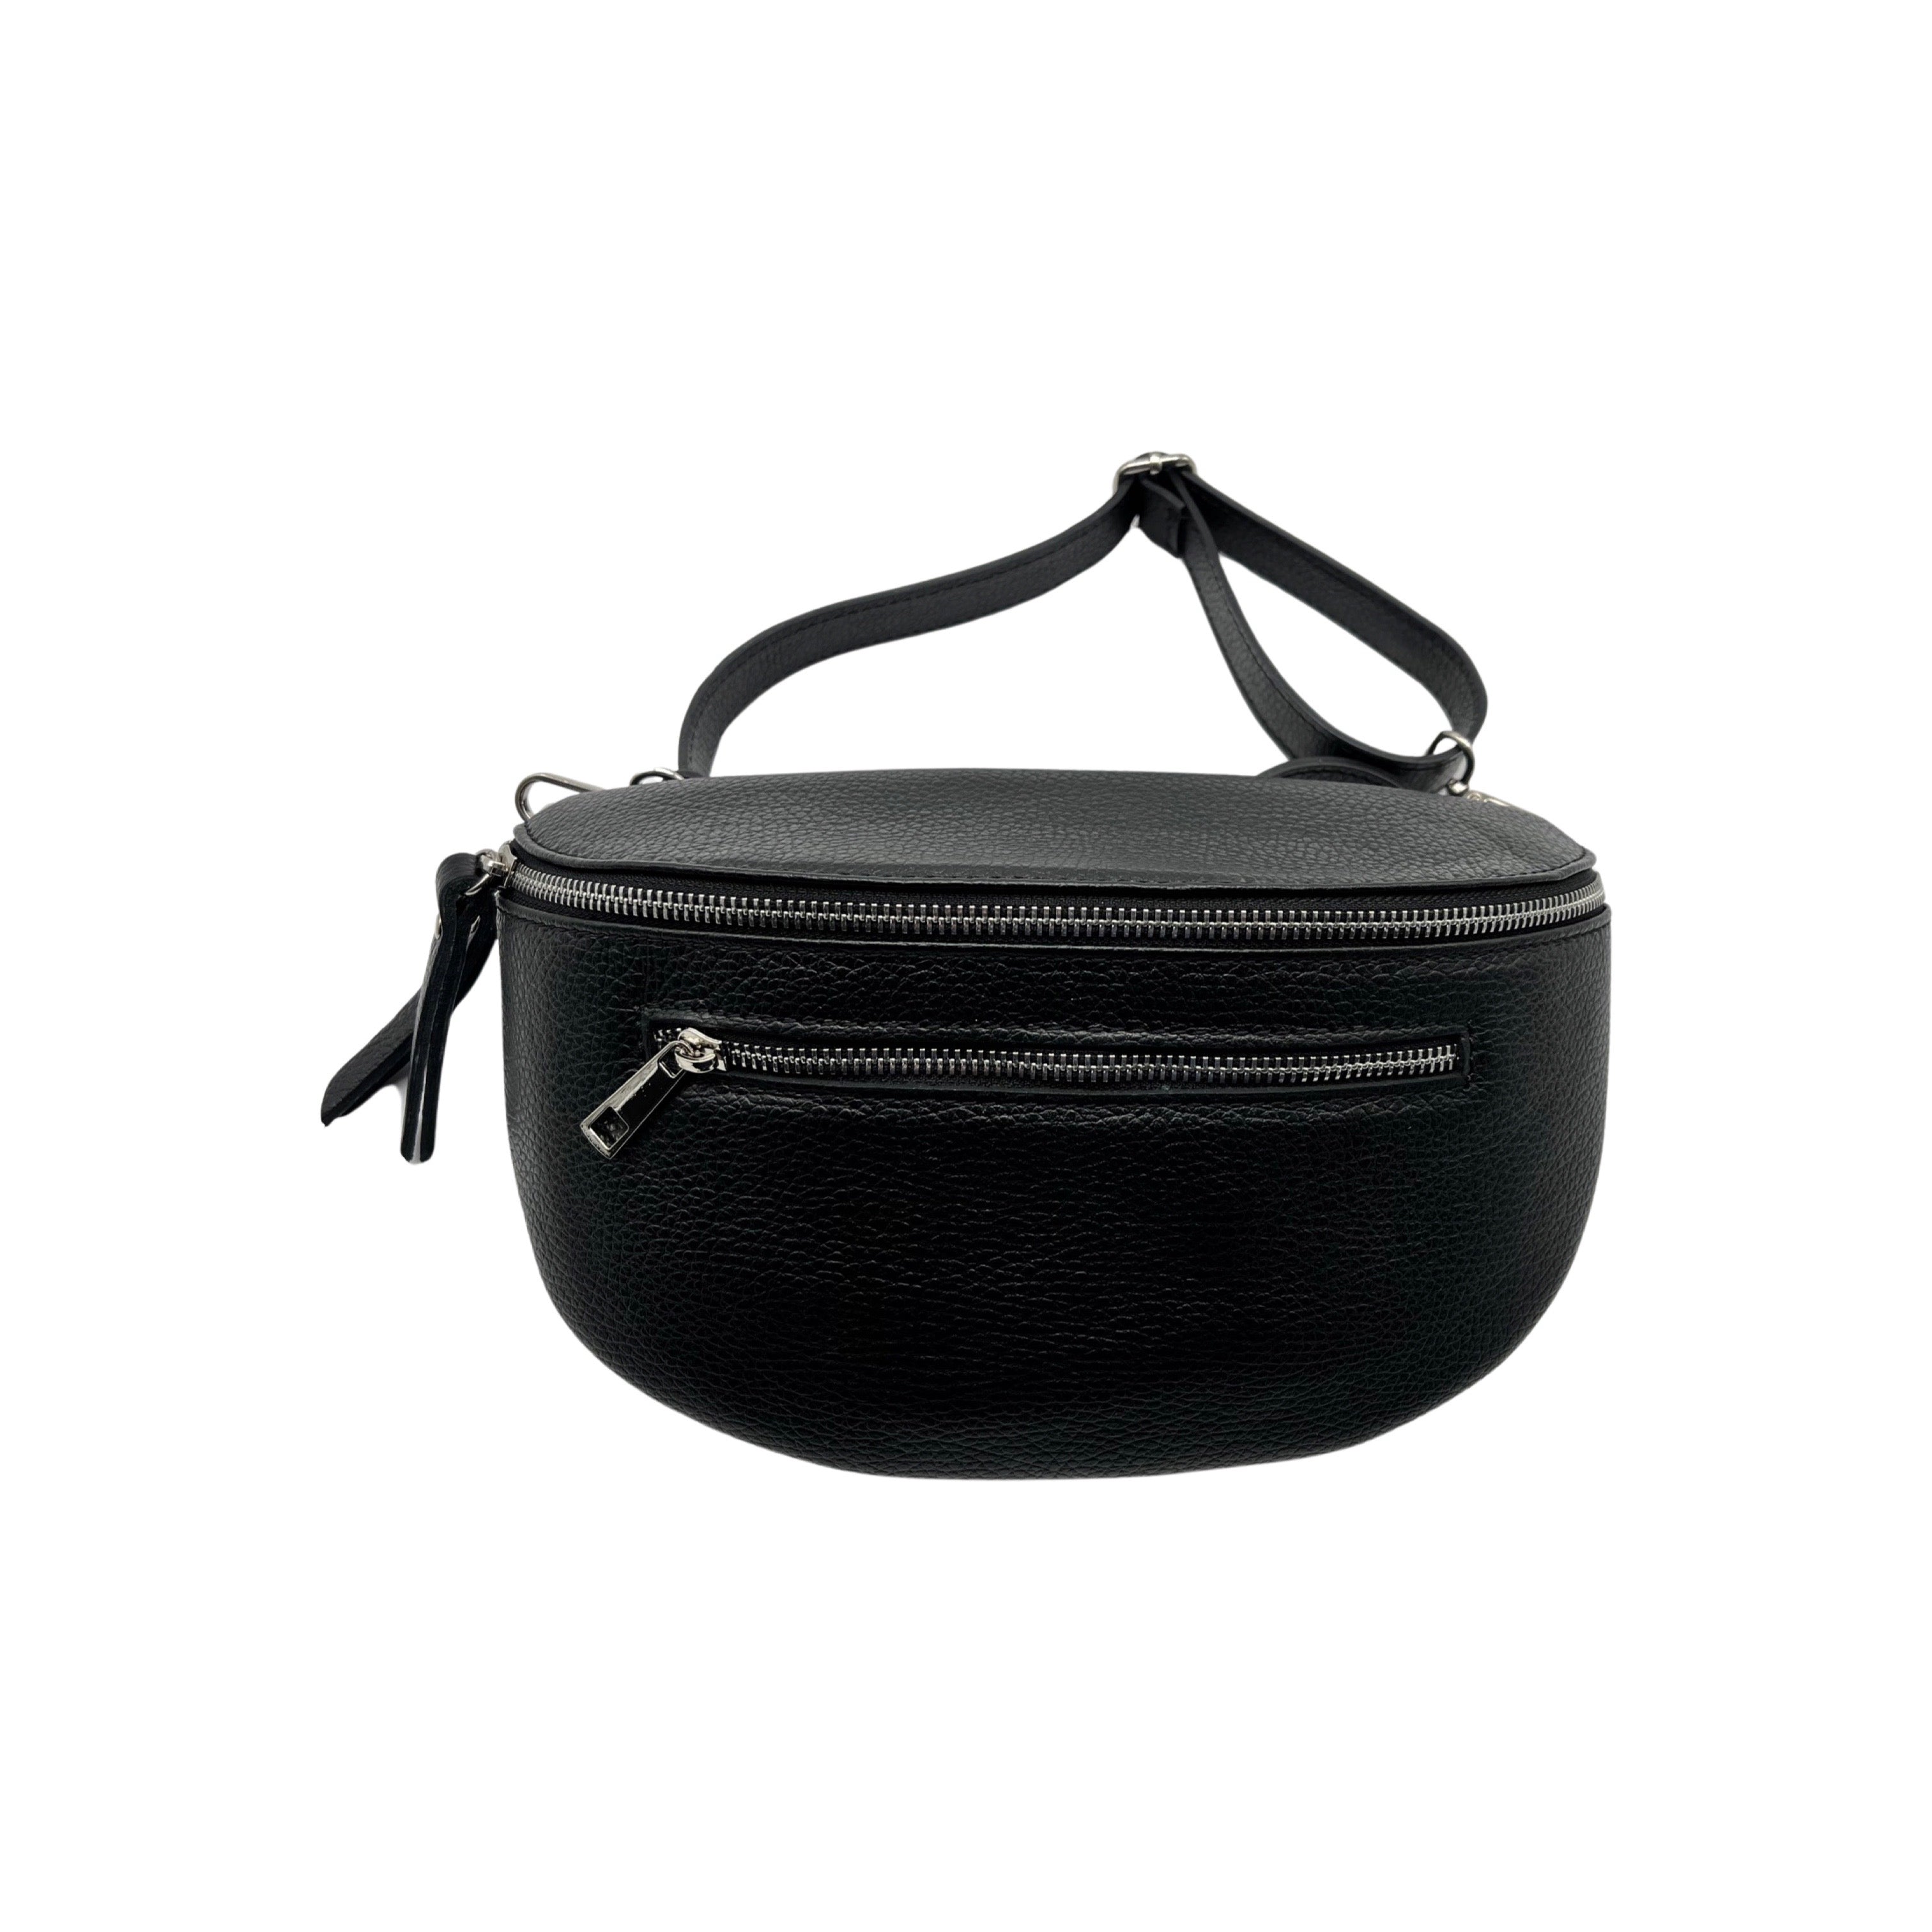 Buy Lee Grand Women's Hand Bag | Tote Bags | Womens Tote Bags | Handbags  for Womens | Handbags for Girls at Amazon.in